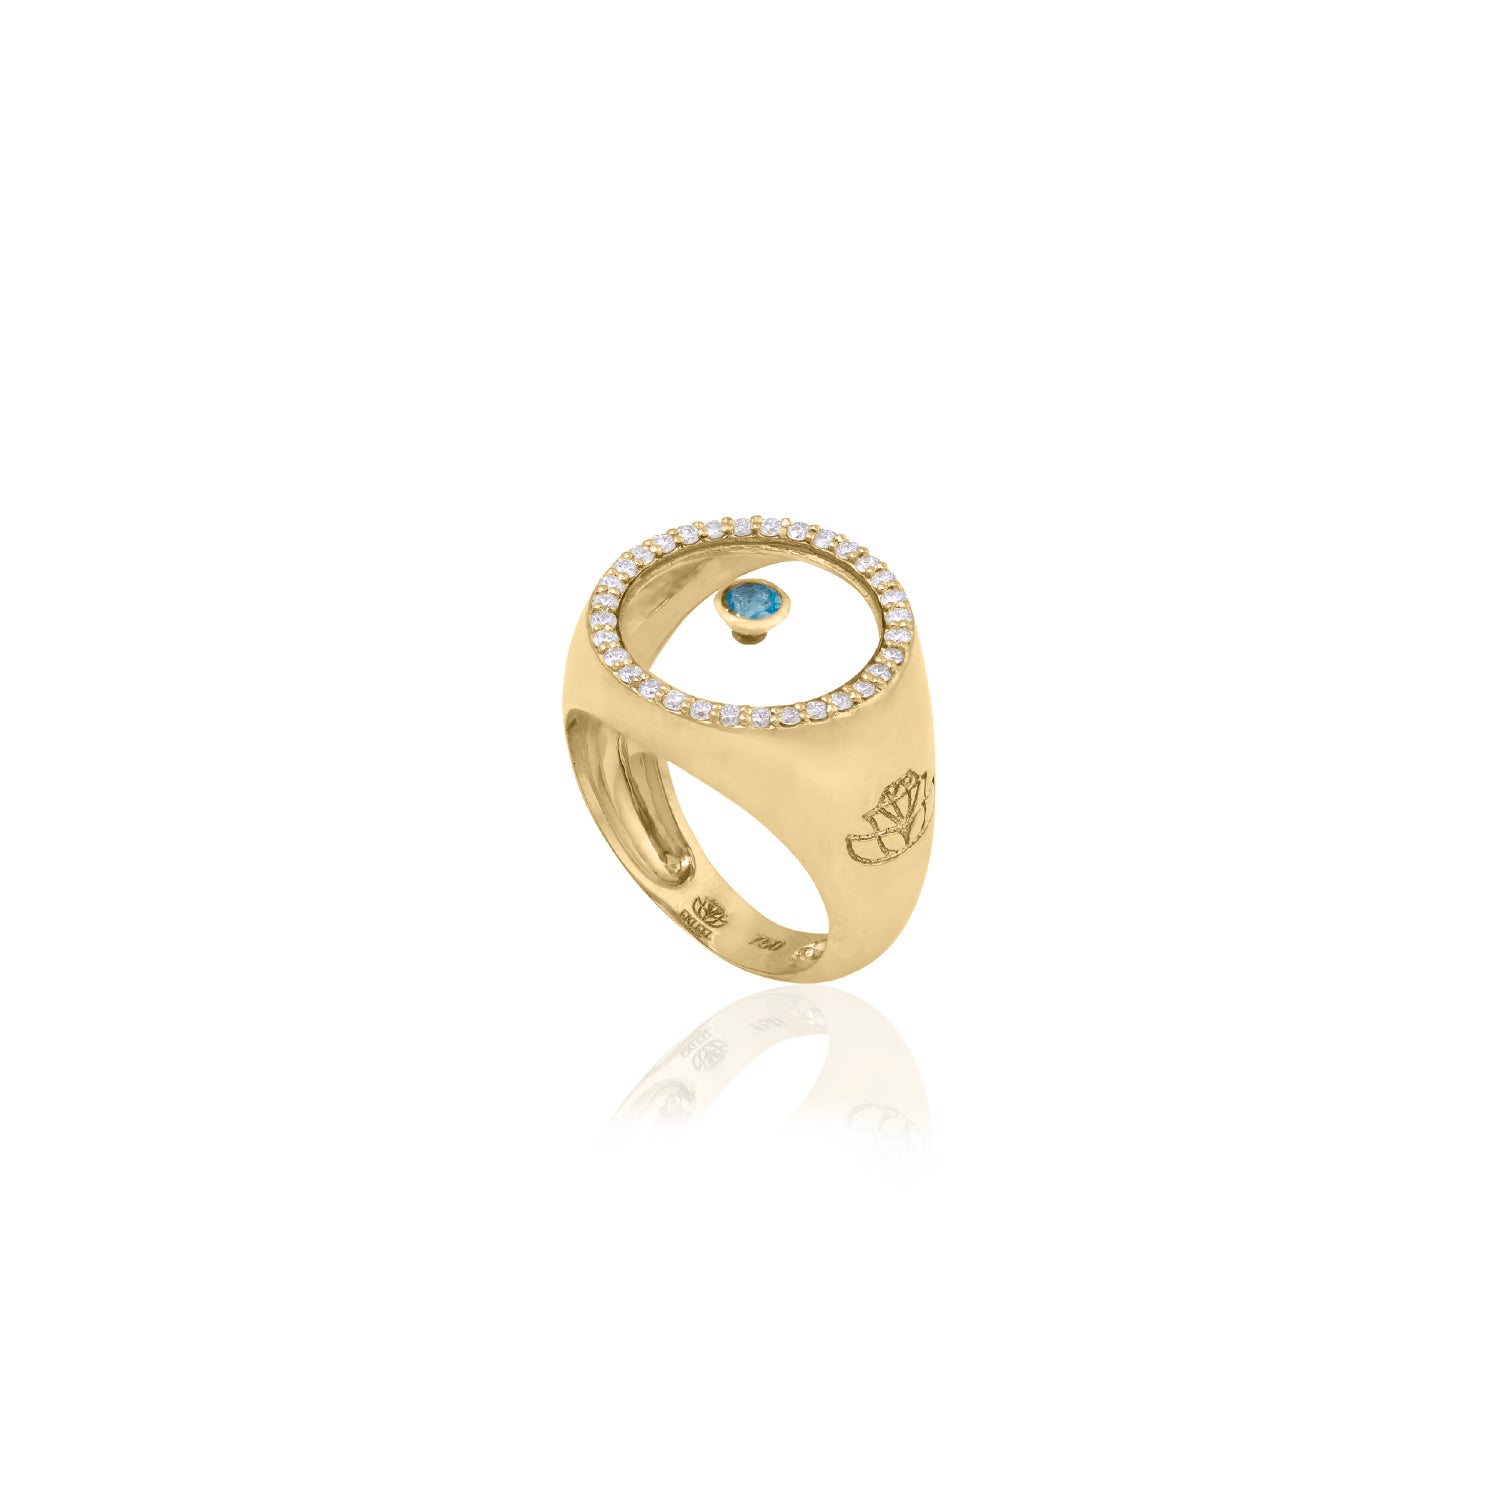 Blue Topaz December Birthstone Ring in Yellow Gold